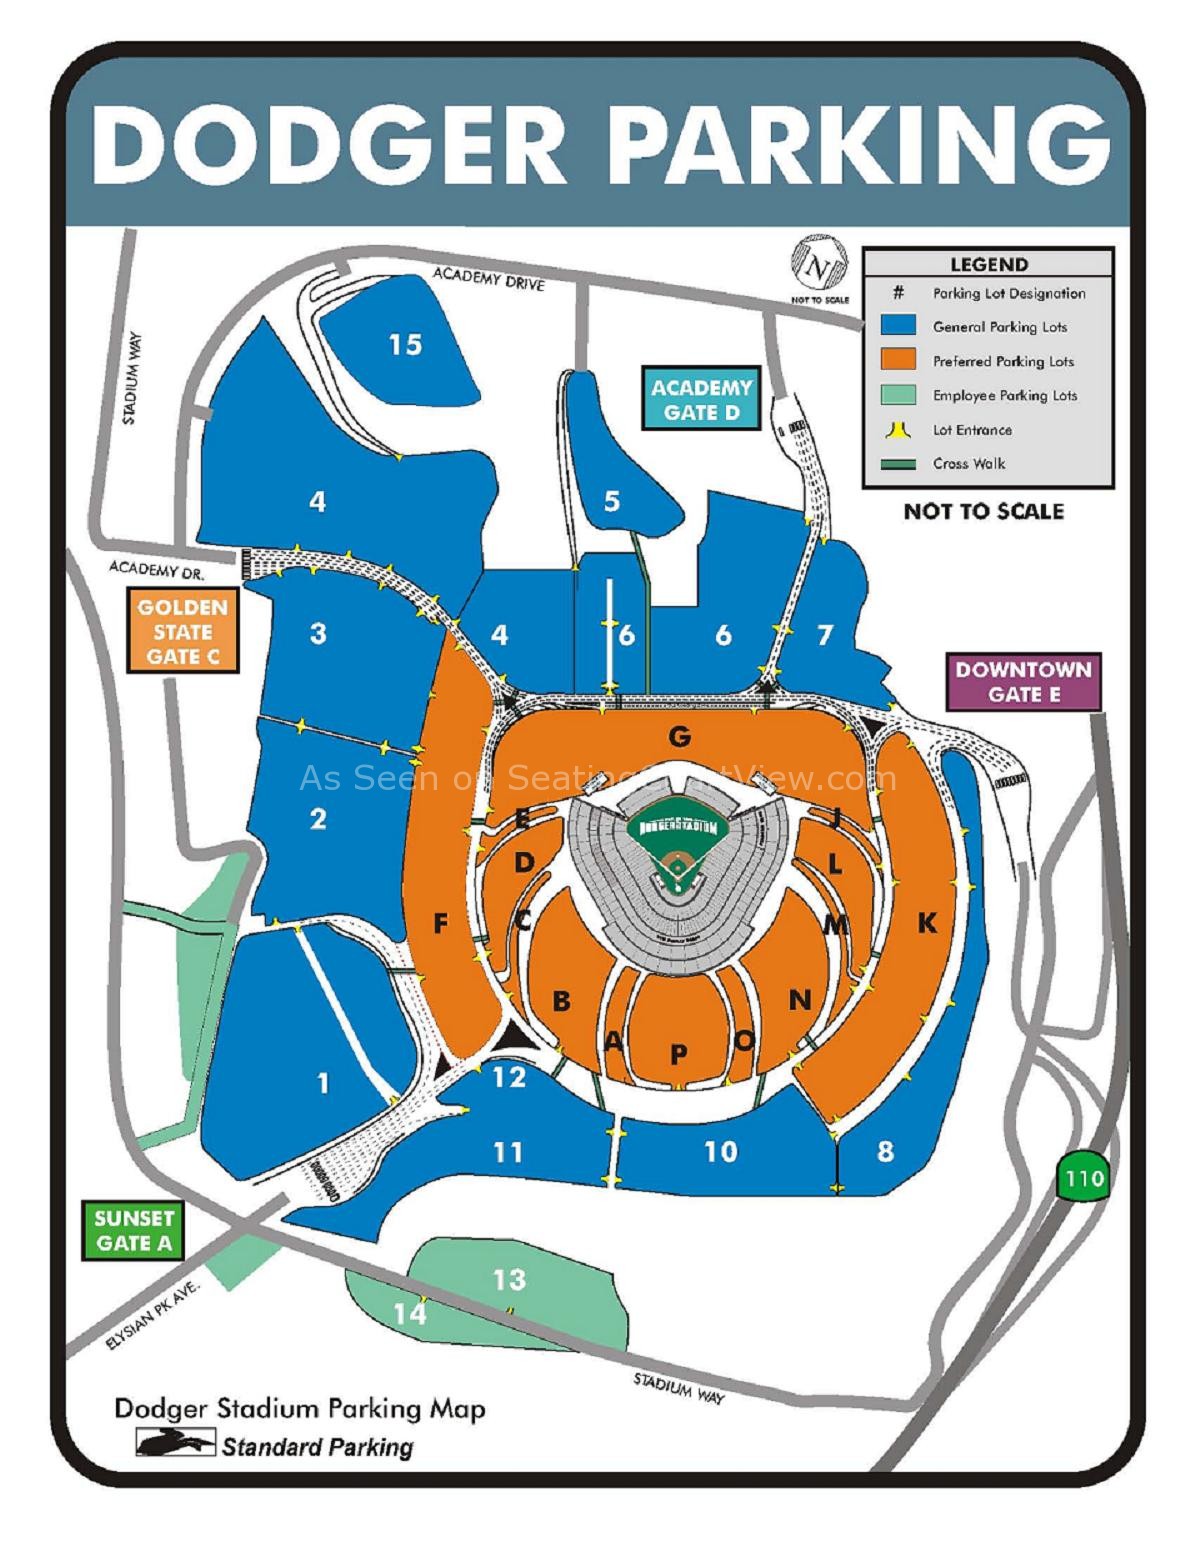 Dodger Stadium Parking Map 